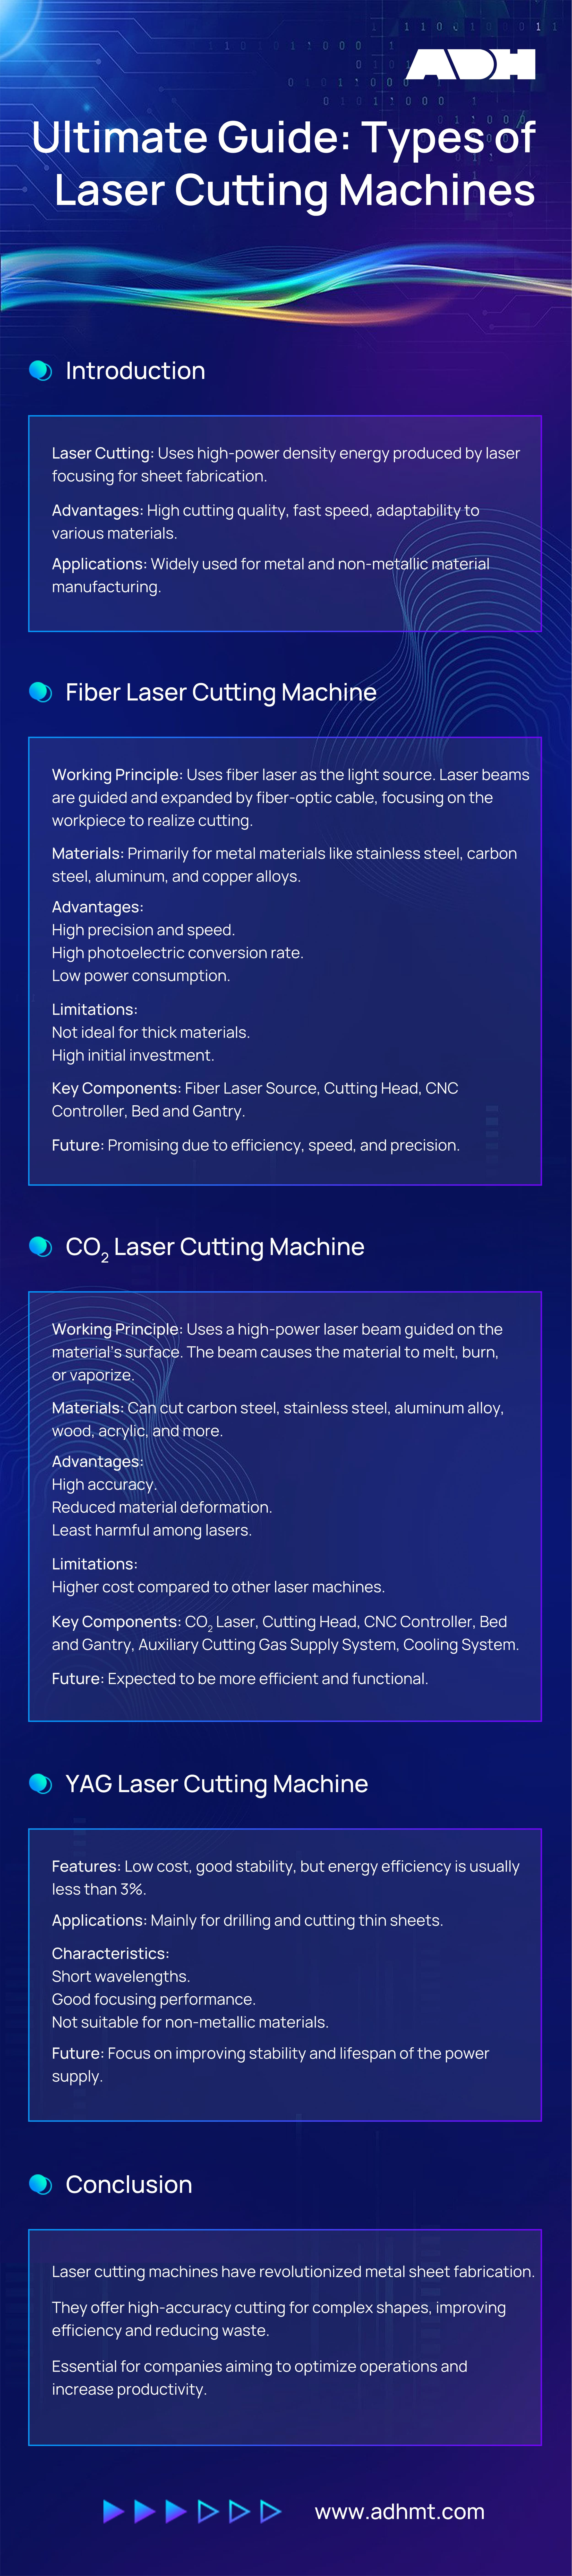 infografia sobre os tipos de máquinas de corte a laser